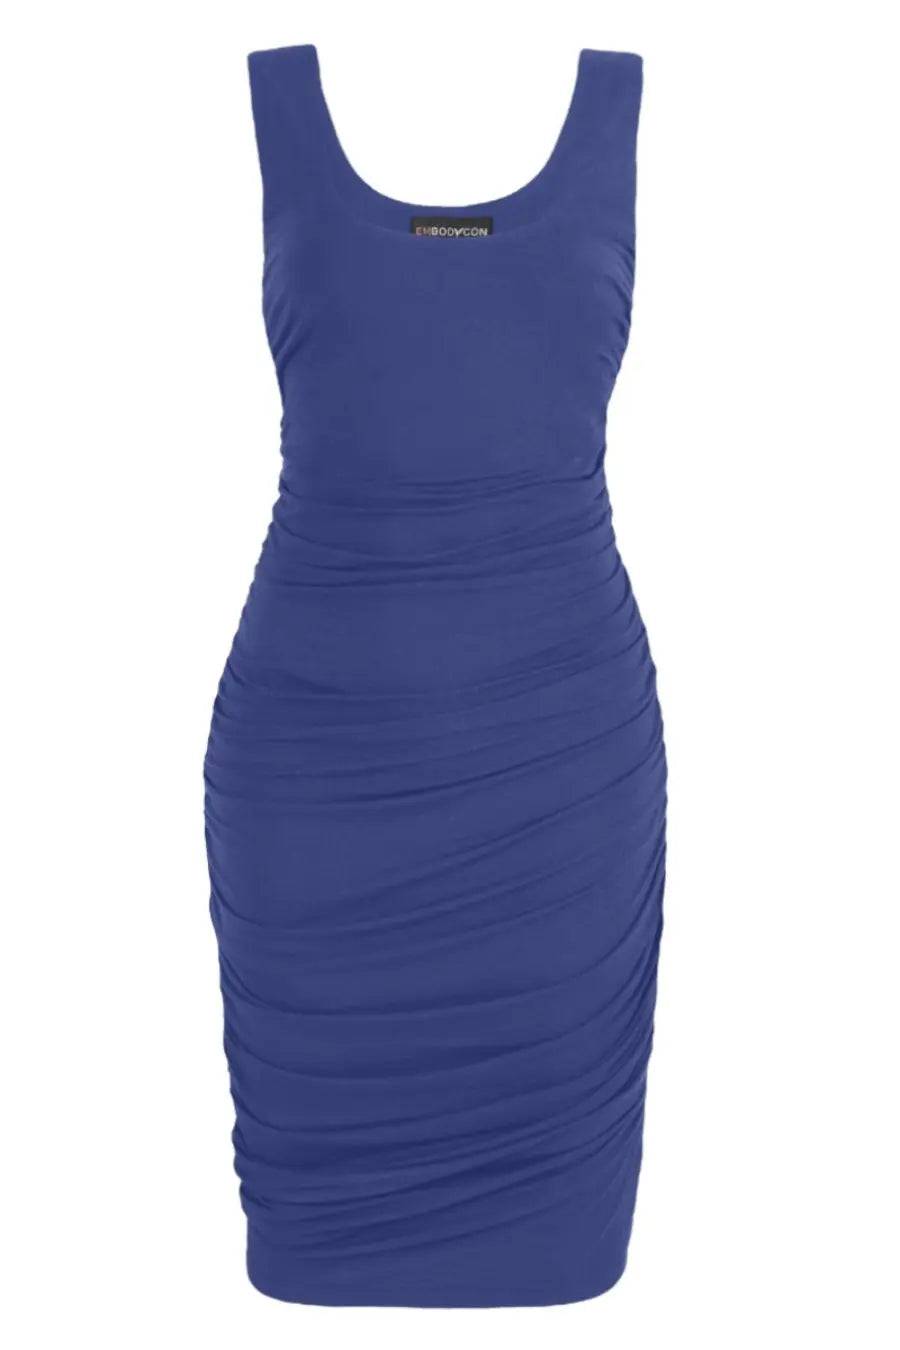 Embodycon™ Tank Shaping Dress - Ocean Blue Embodycon